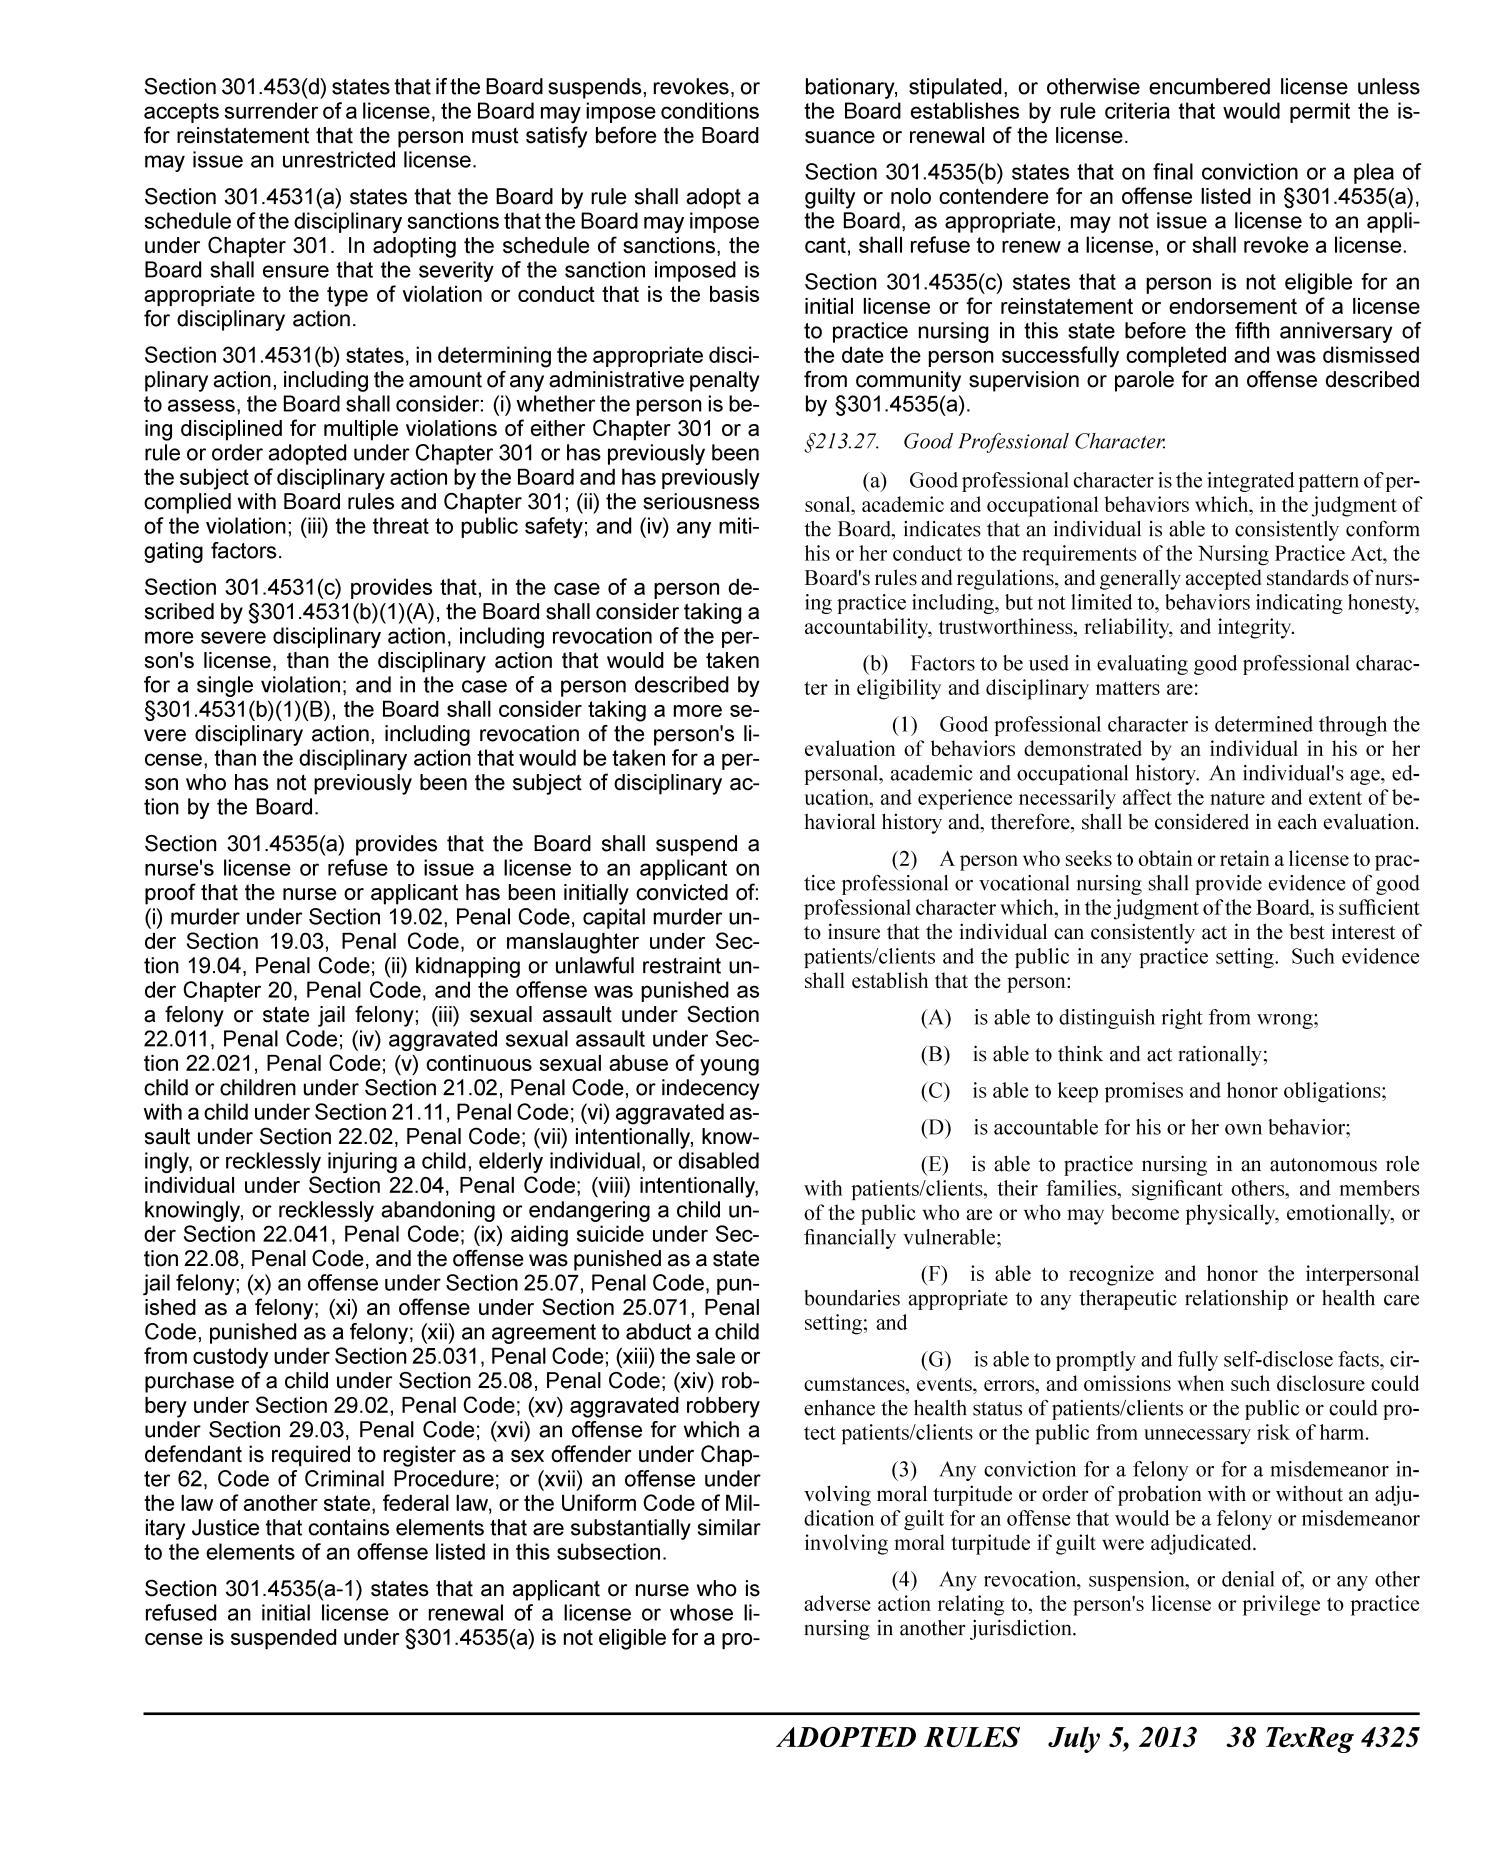 Texas Register, Volume 38, Number 27, Pages 4243-4444, July 5, 2013
                                                
                                                    4325
                                                